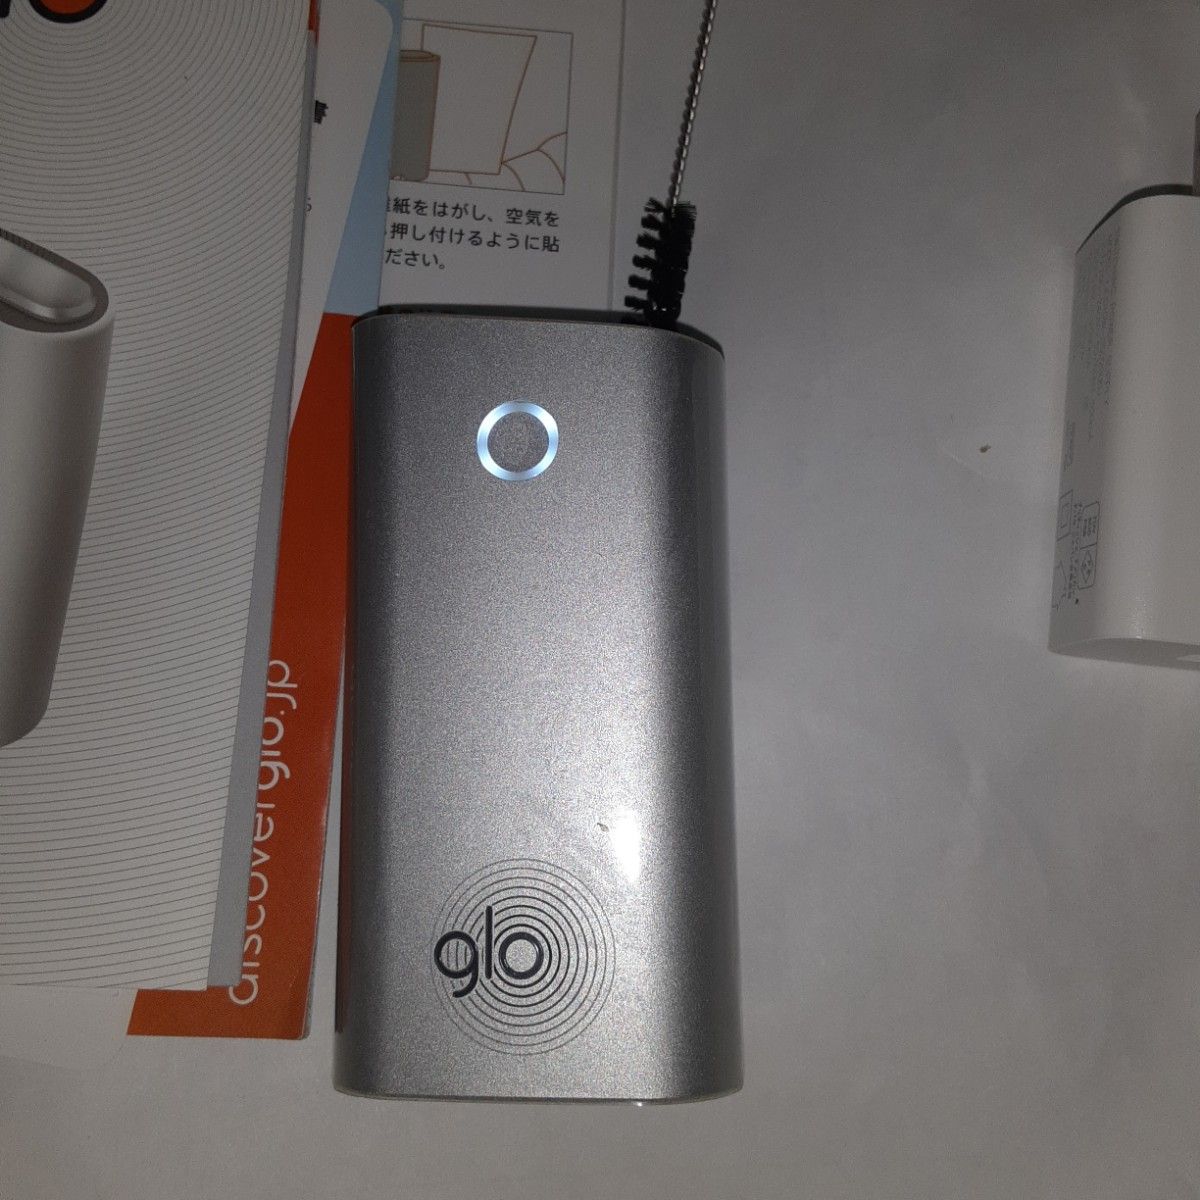 glo グロー　初代　2017年12月購入